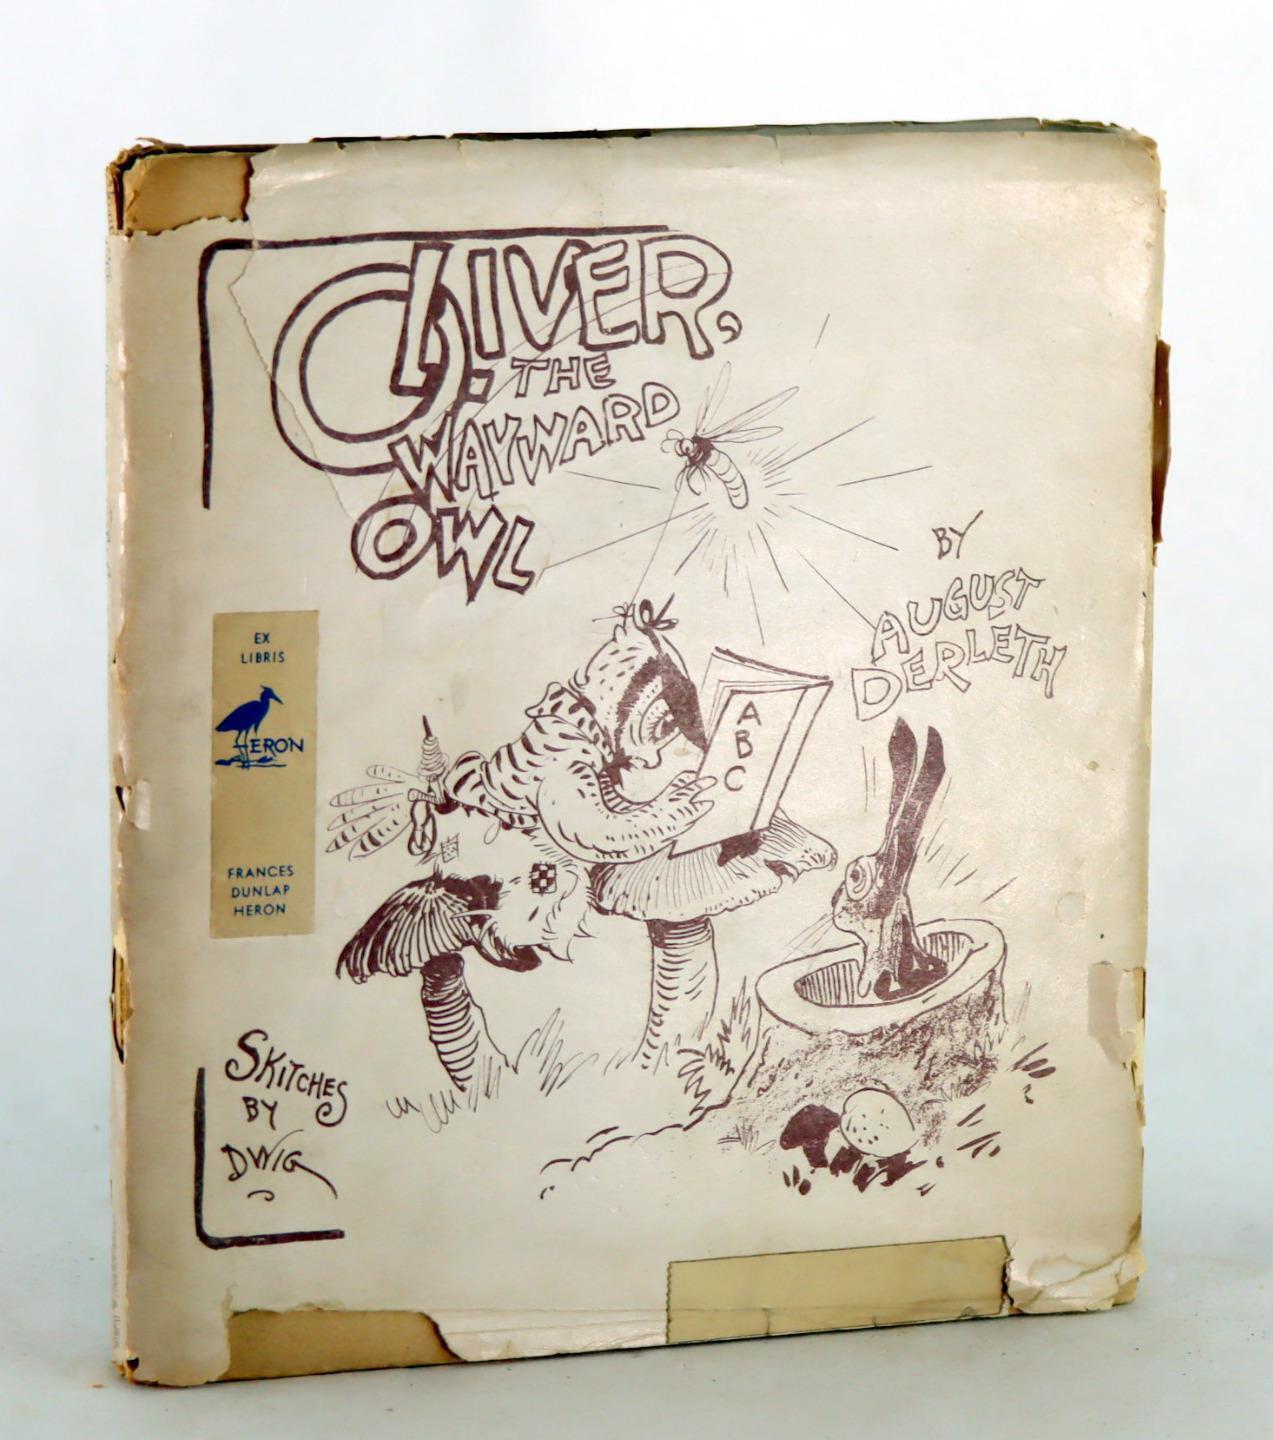 August Derleth Clare Victor Dwiggins 1st Ed 1945 Oliver The Wayward Owl HC w/DJ